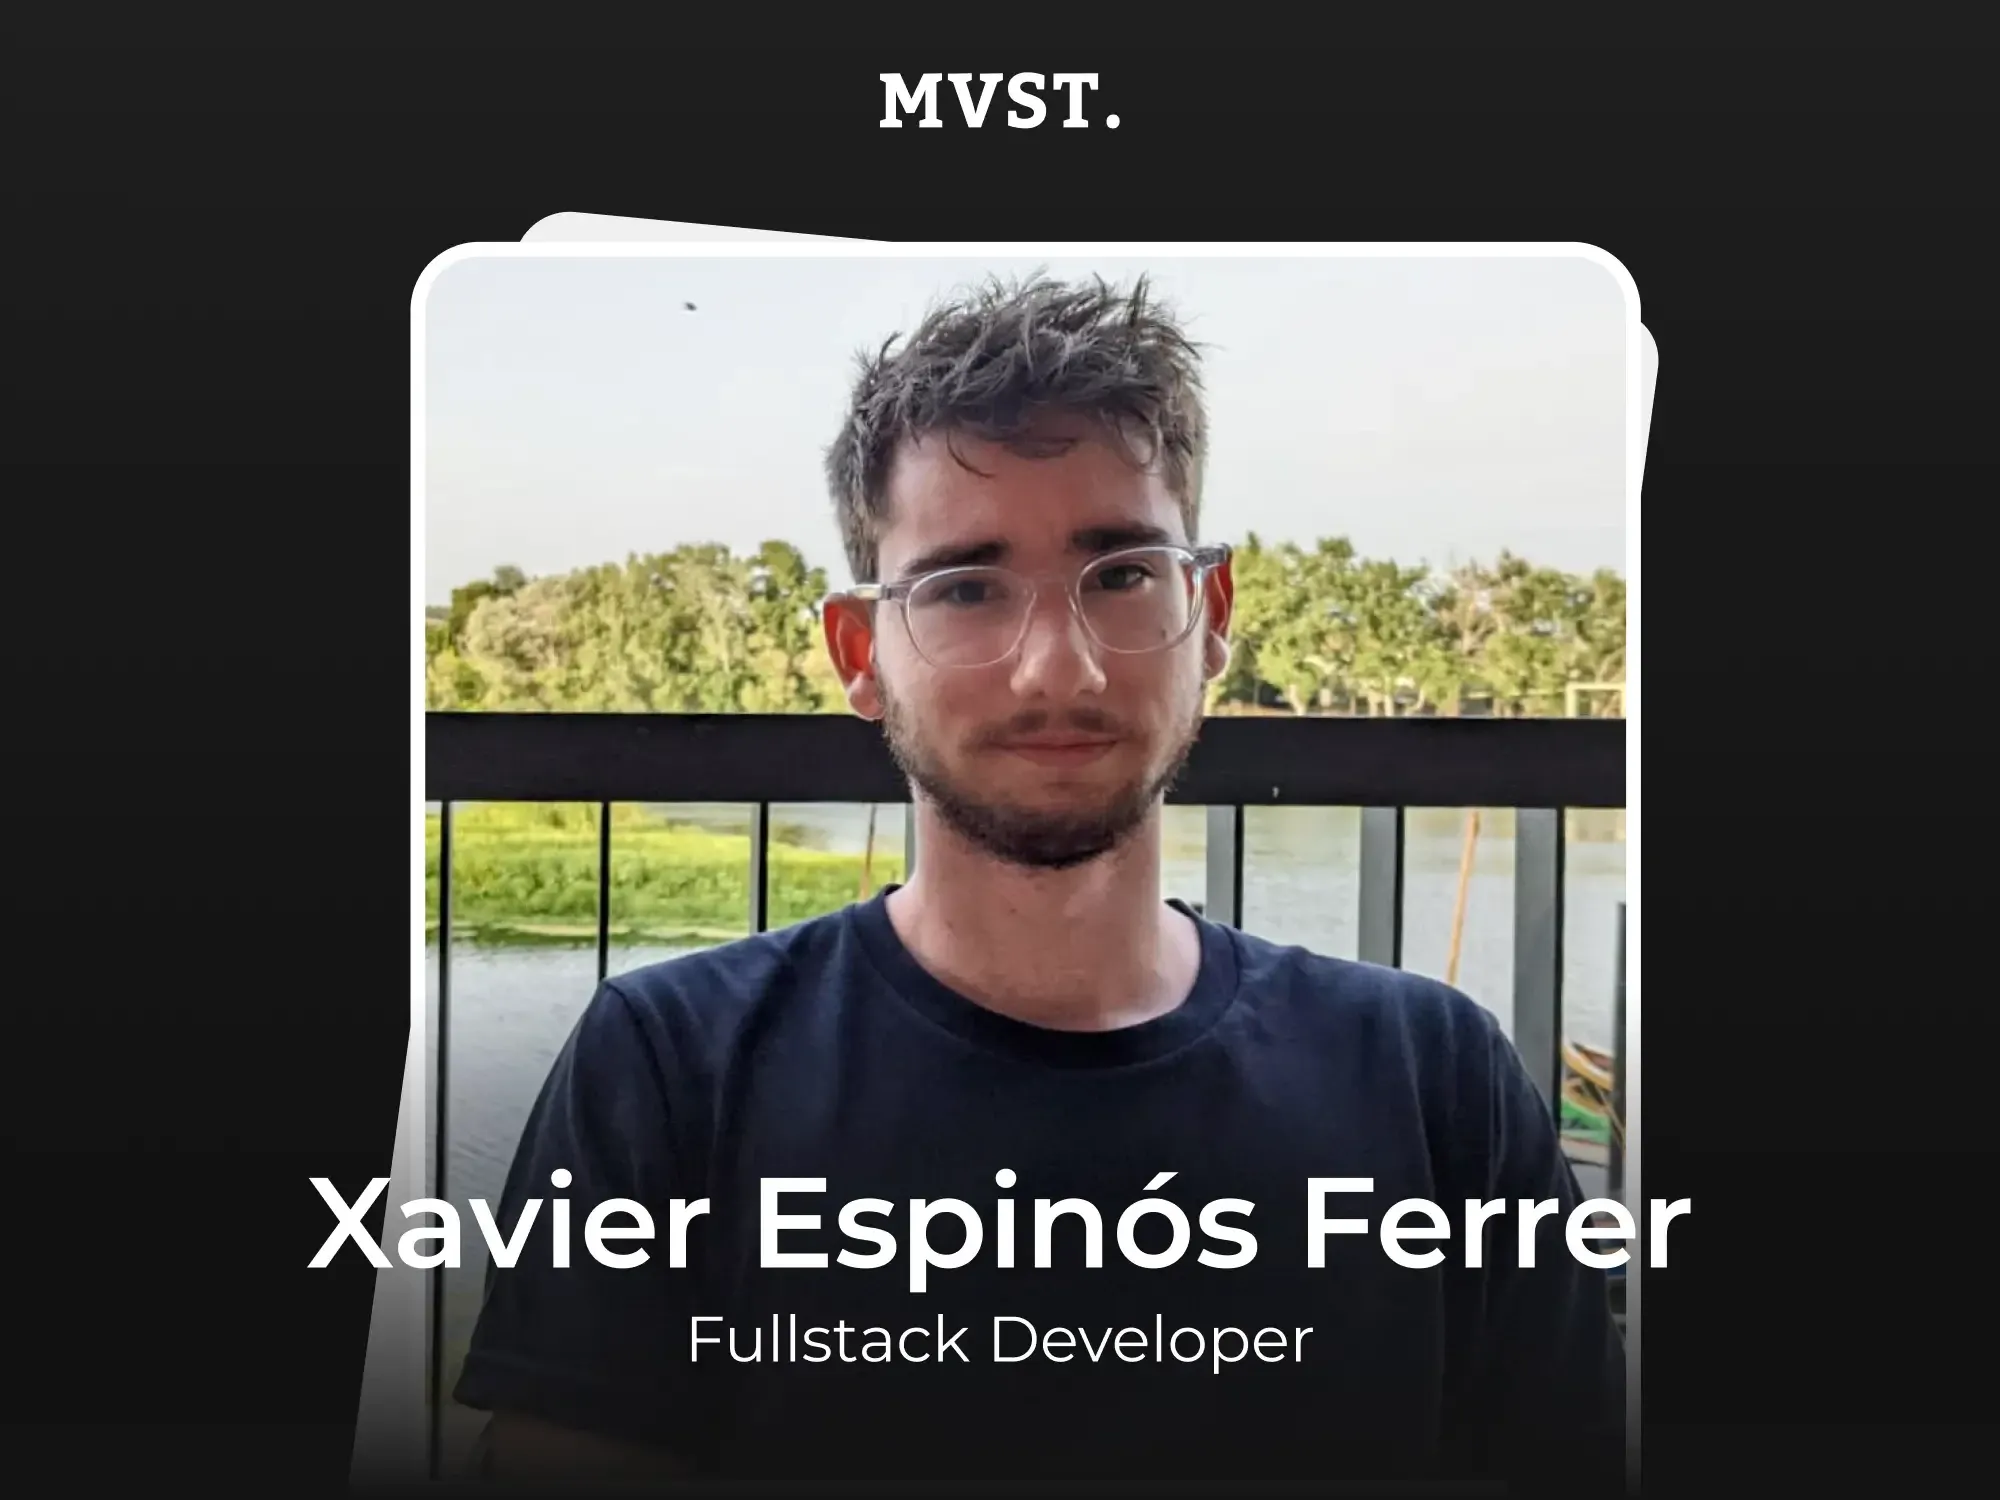 Welcome to MVST, Xavier!